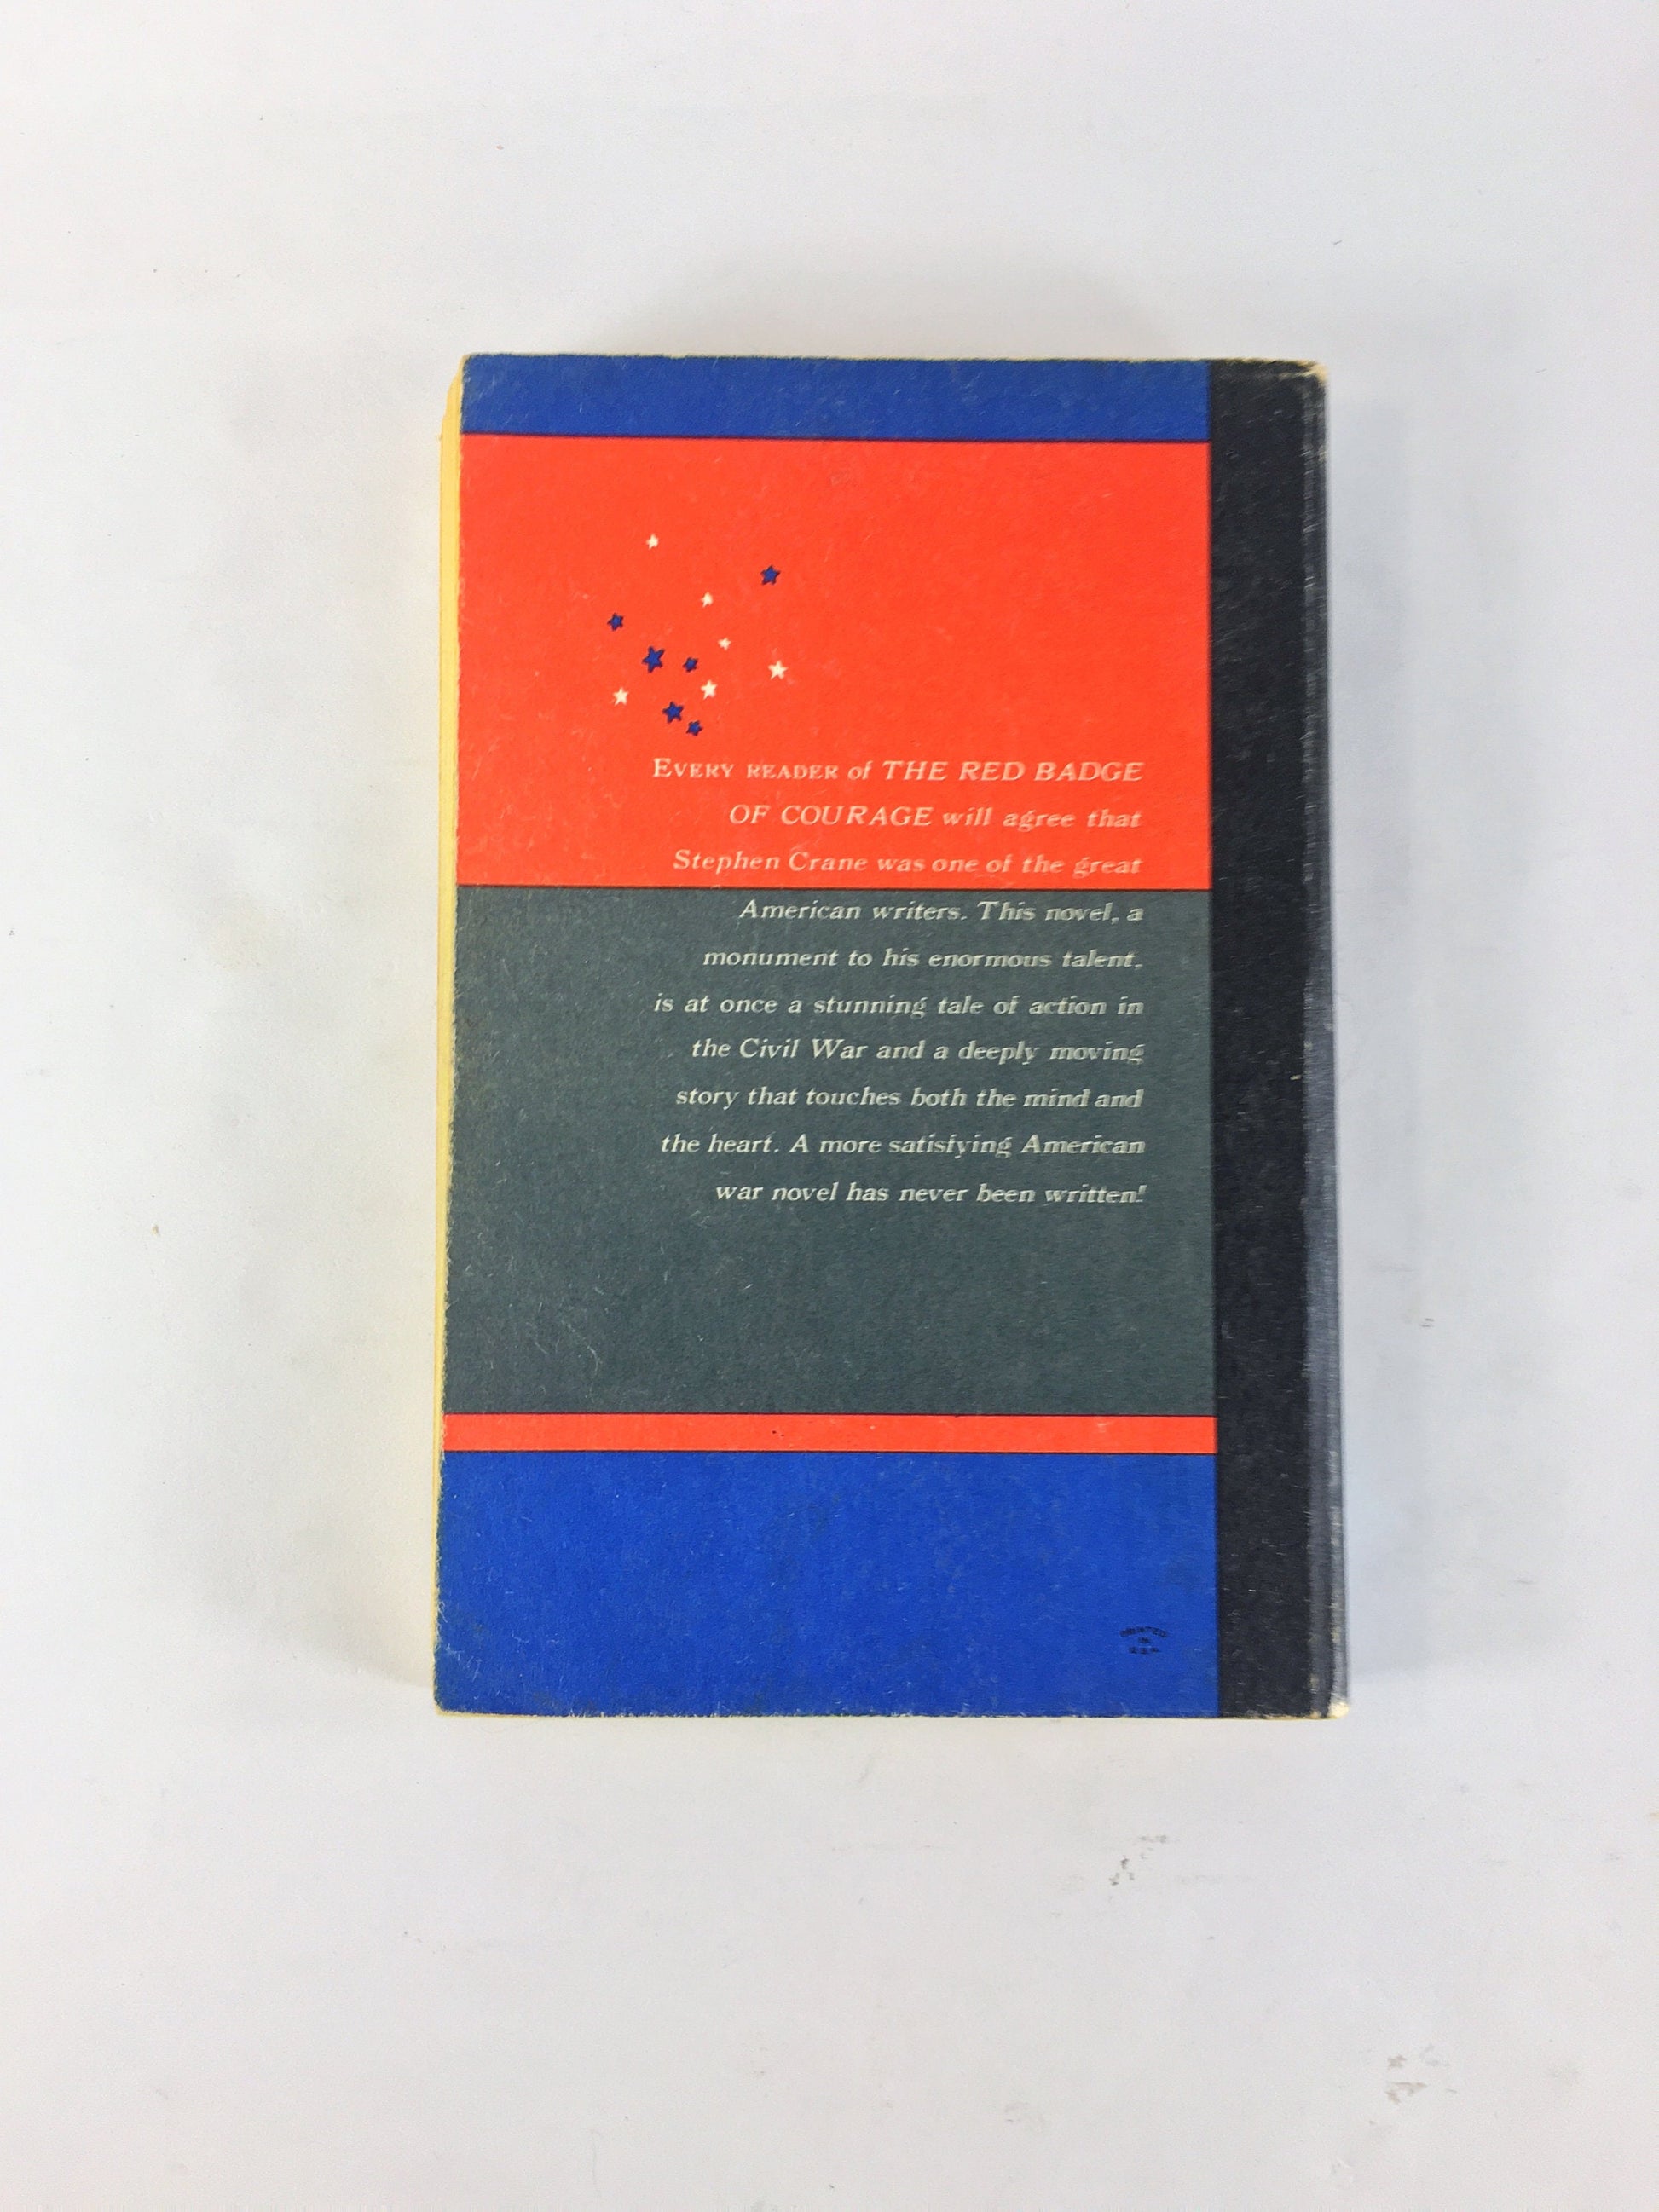 1961 Red Badge of Courage by Stephen Crane. Vintage Washington Square paperback book. Blue red black home bookshelf decor. Civil War Union